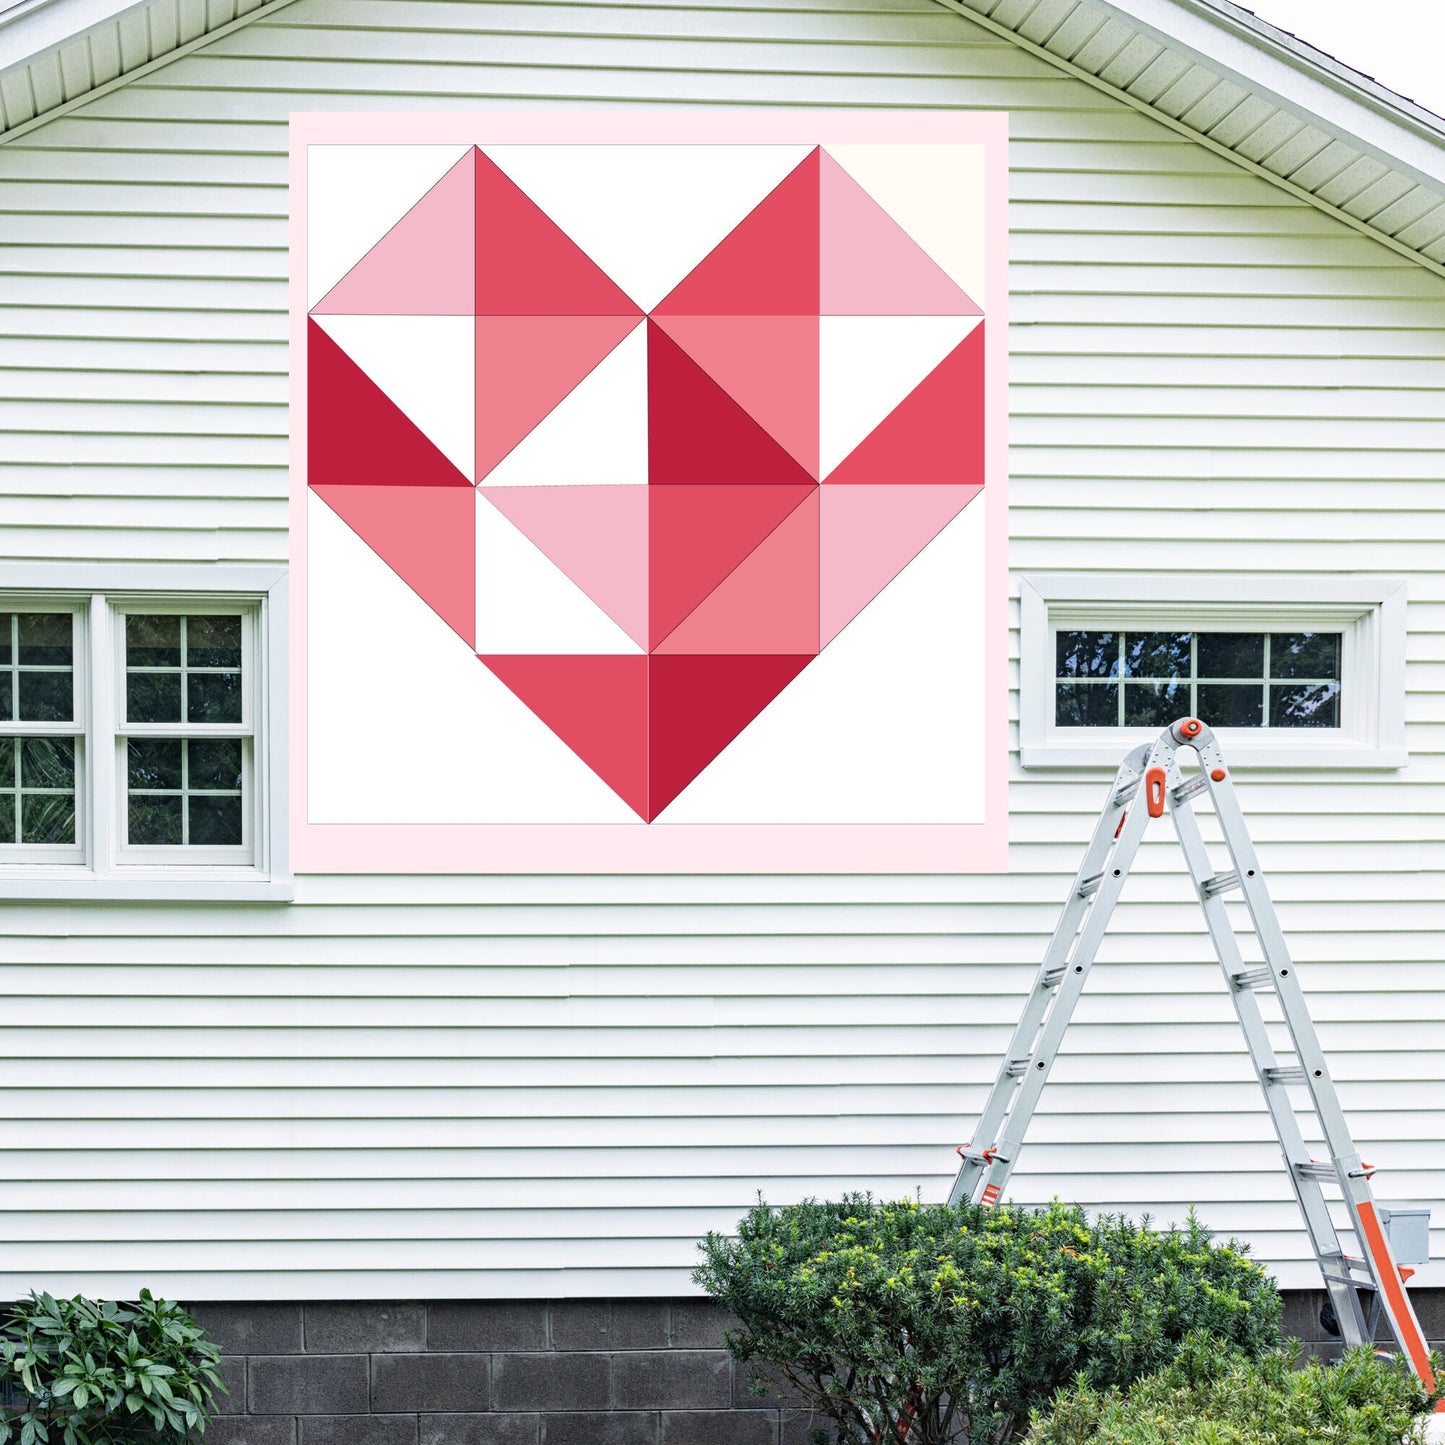 12x12" Heart Painted barn Quilt Digital PDF SVG Pattern